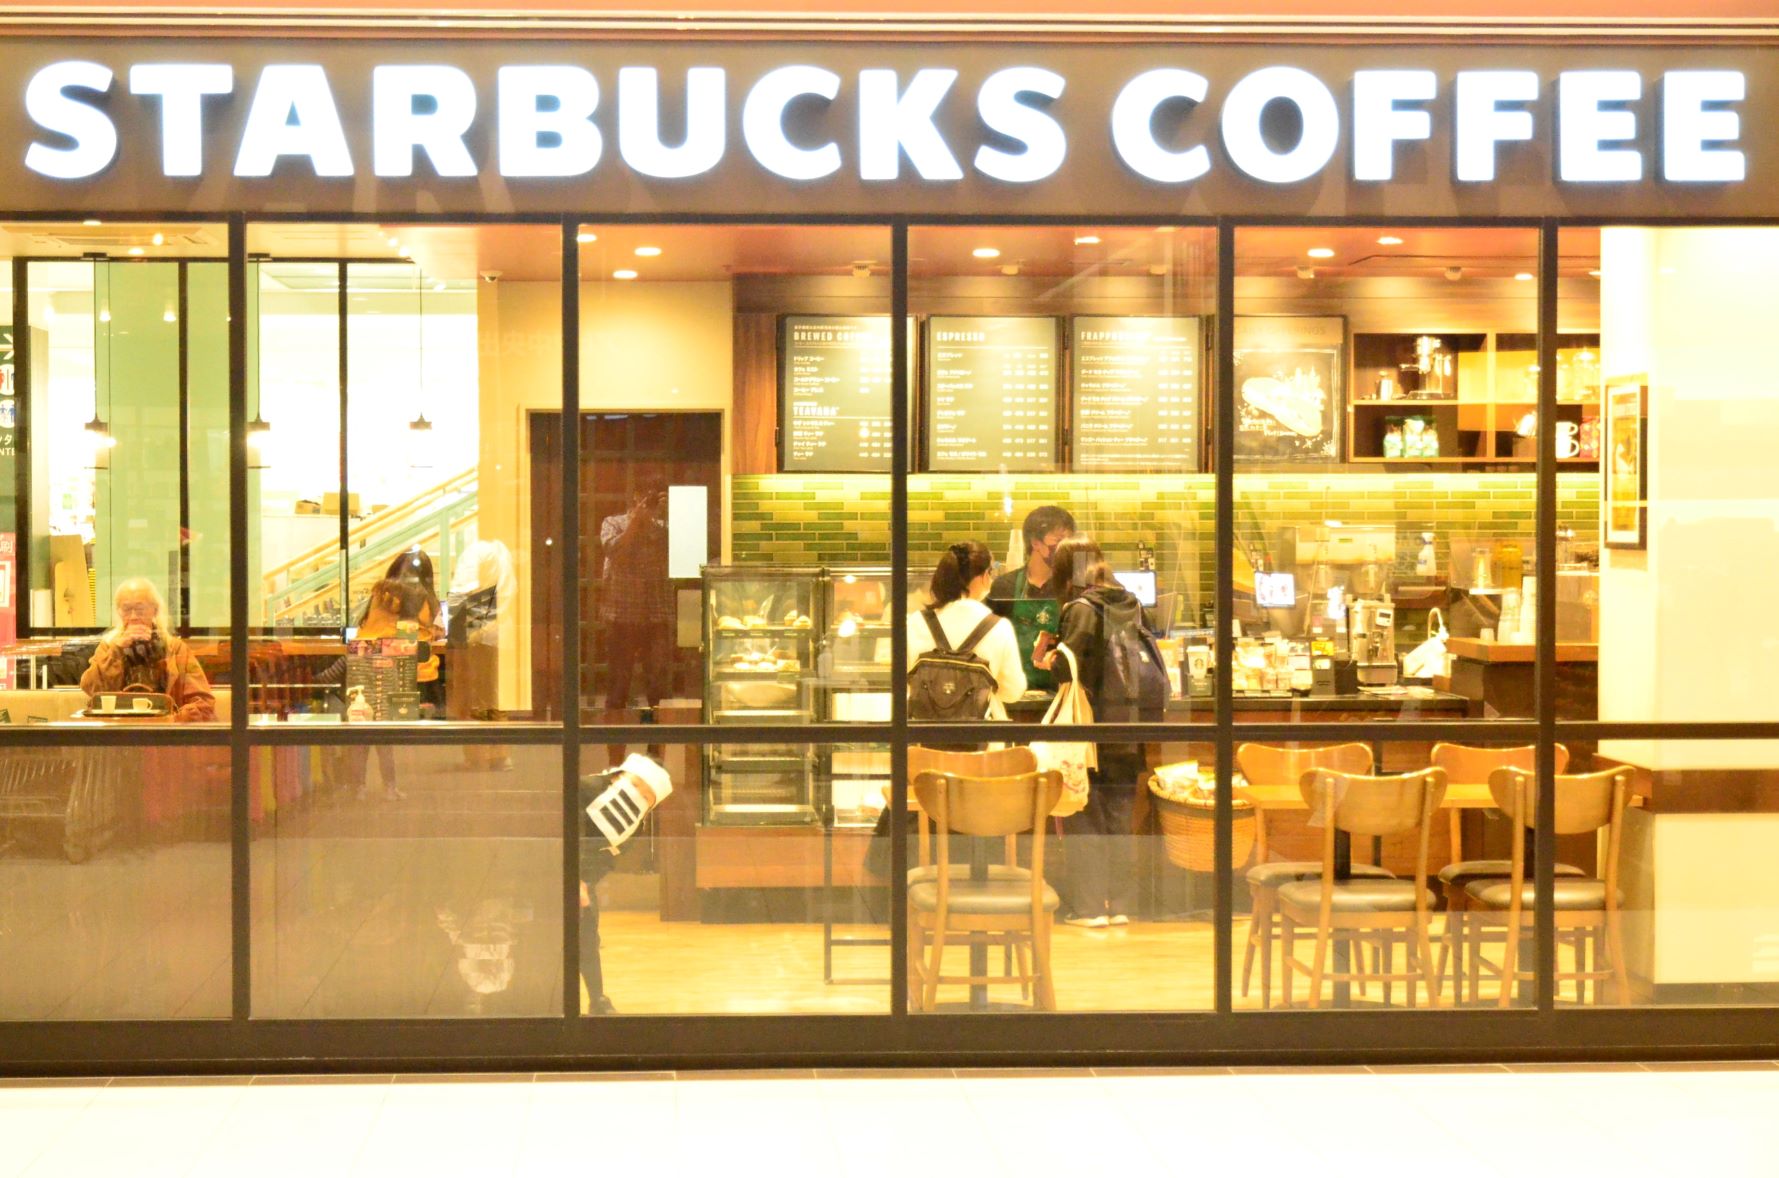 Find KAKUSHI hidden in Starbucks!